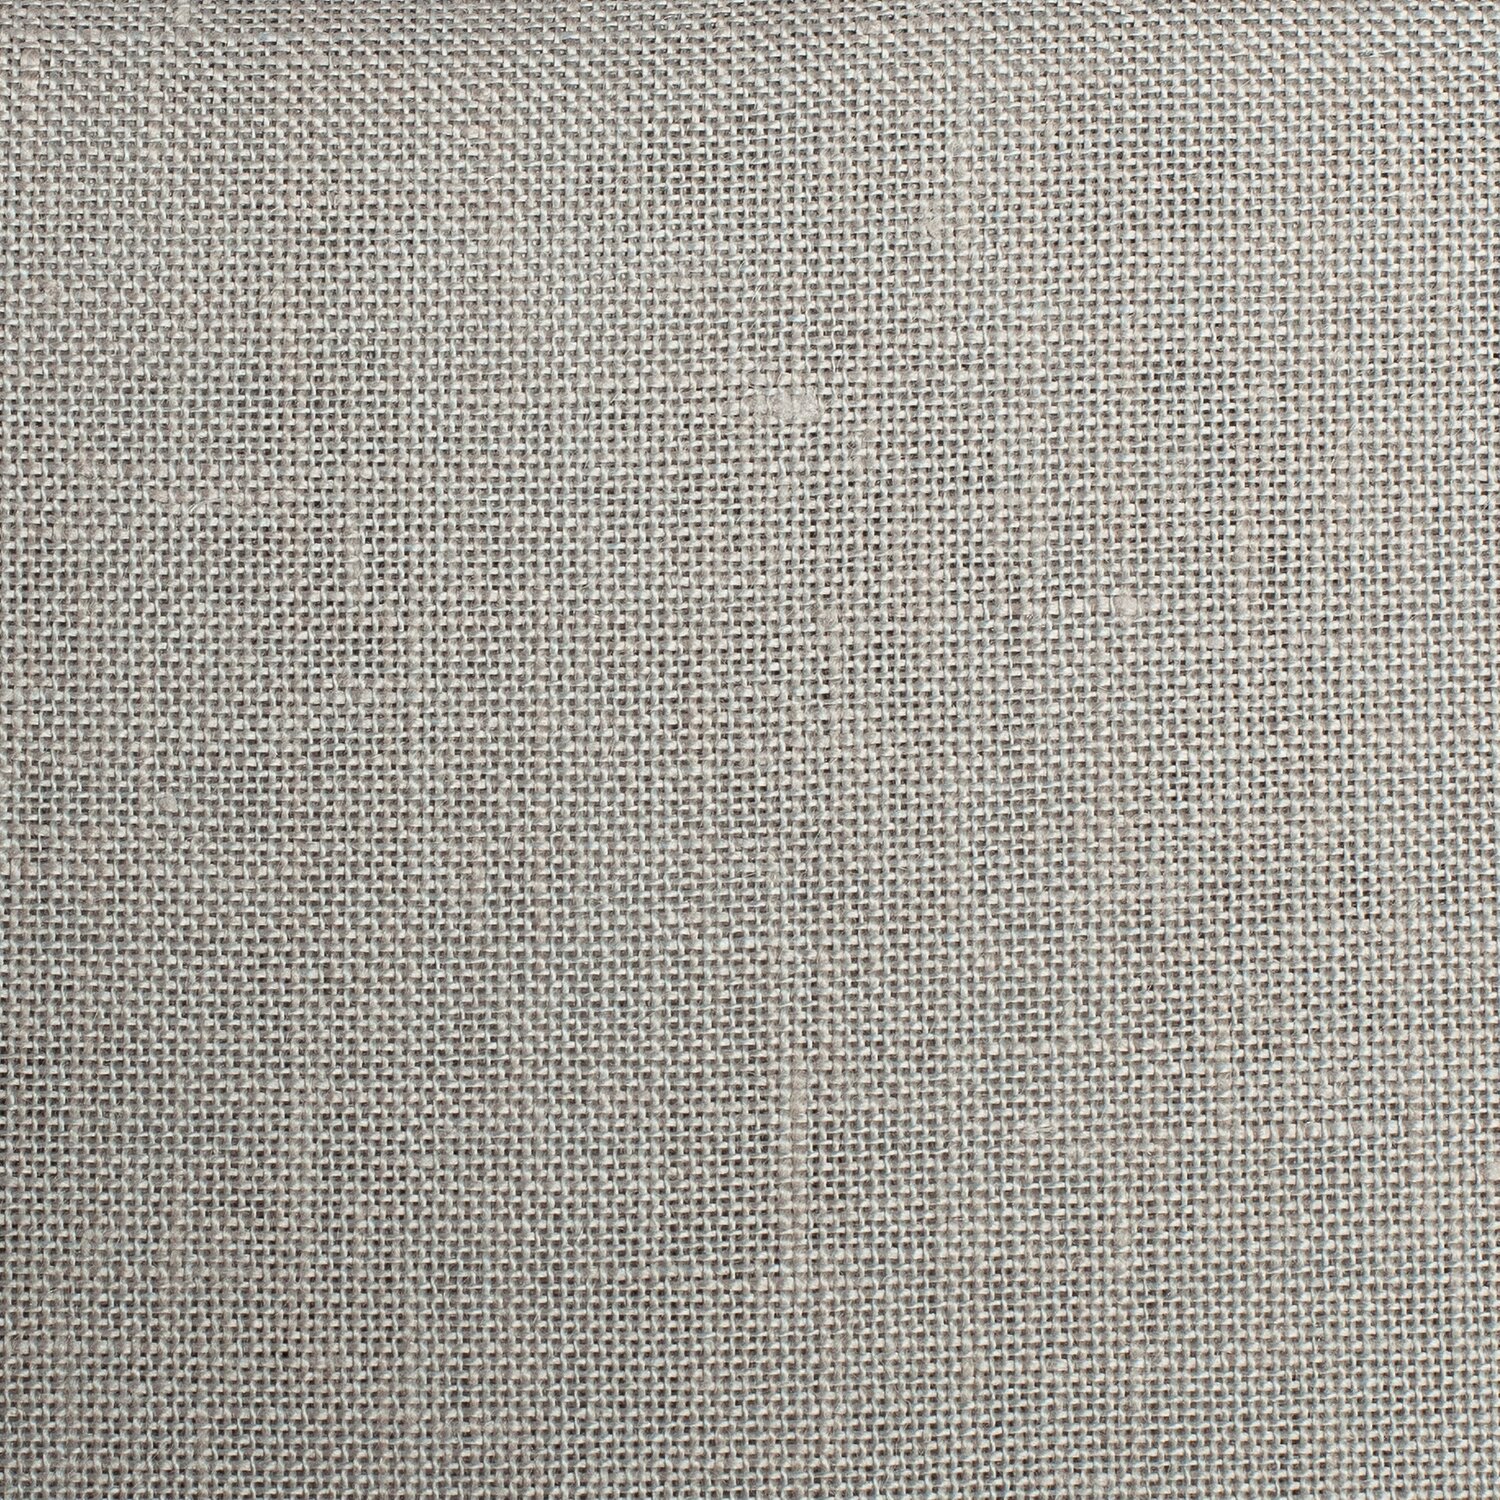 30 Count Parisian Grey Linen